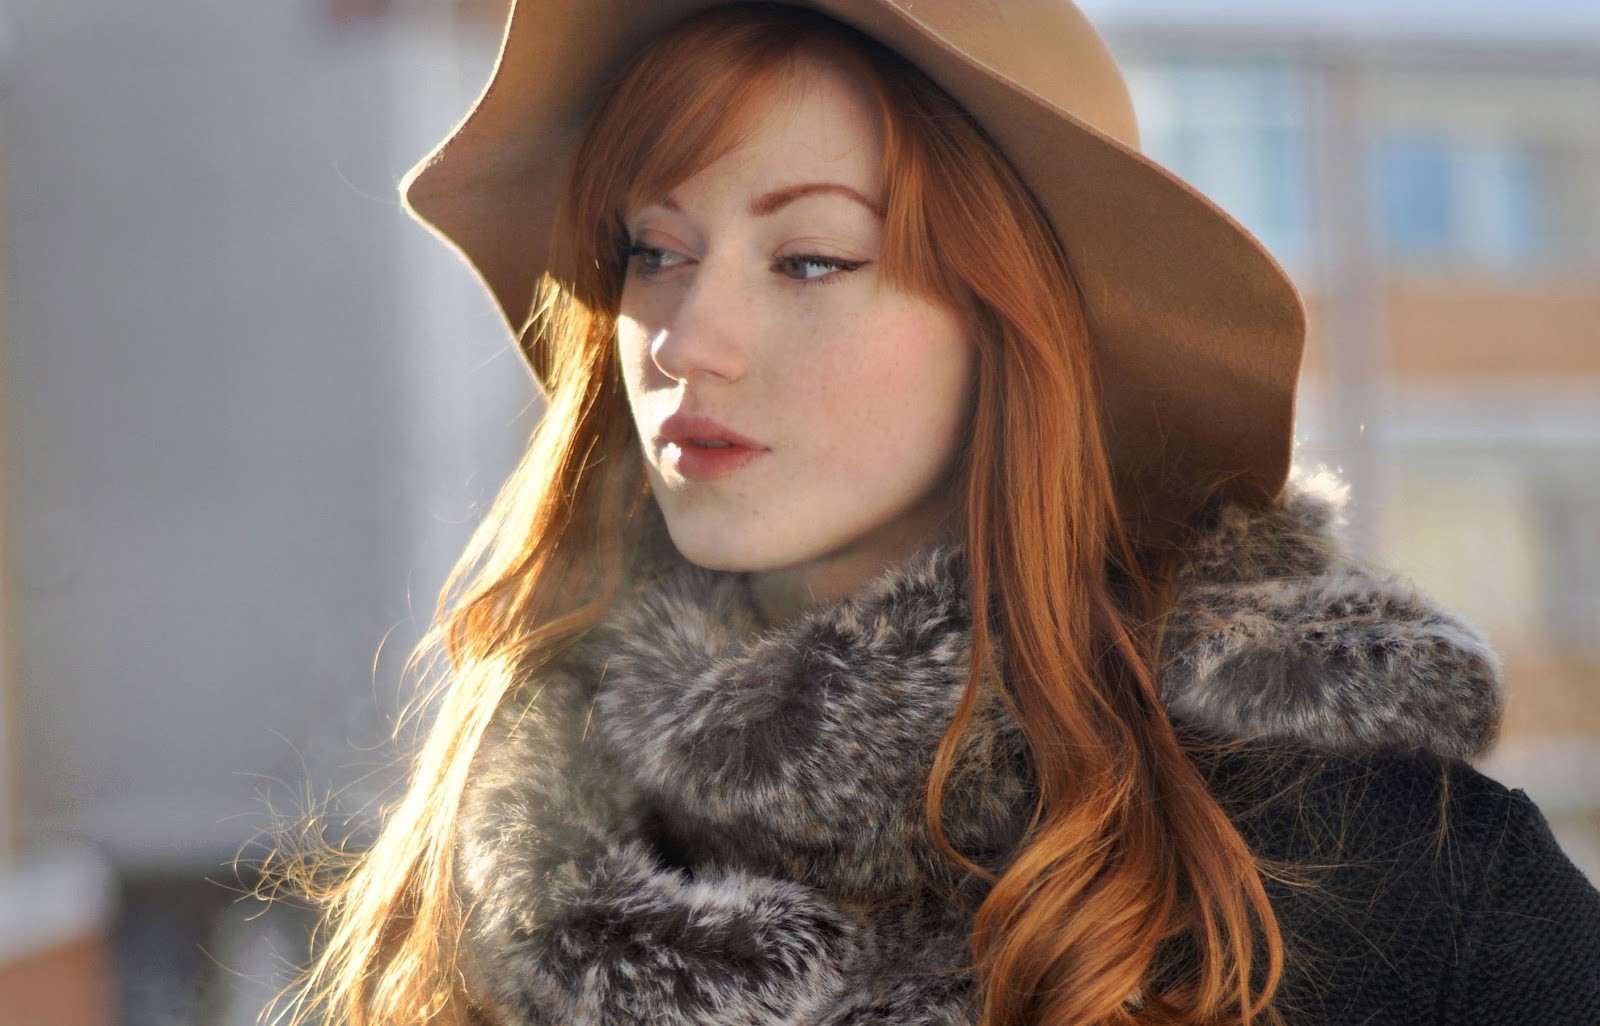 People 1600x1026 women redhead Alina Kovalenko hat looking away millinery fur long hair women with hats fashion pale face women outdoors glamour